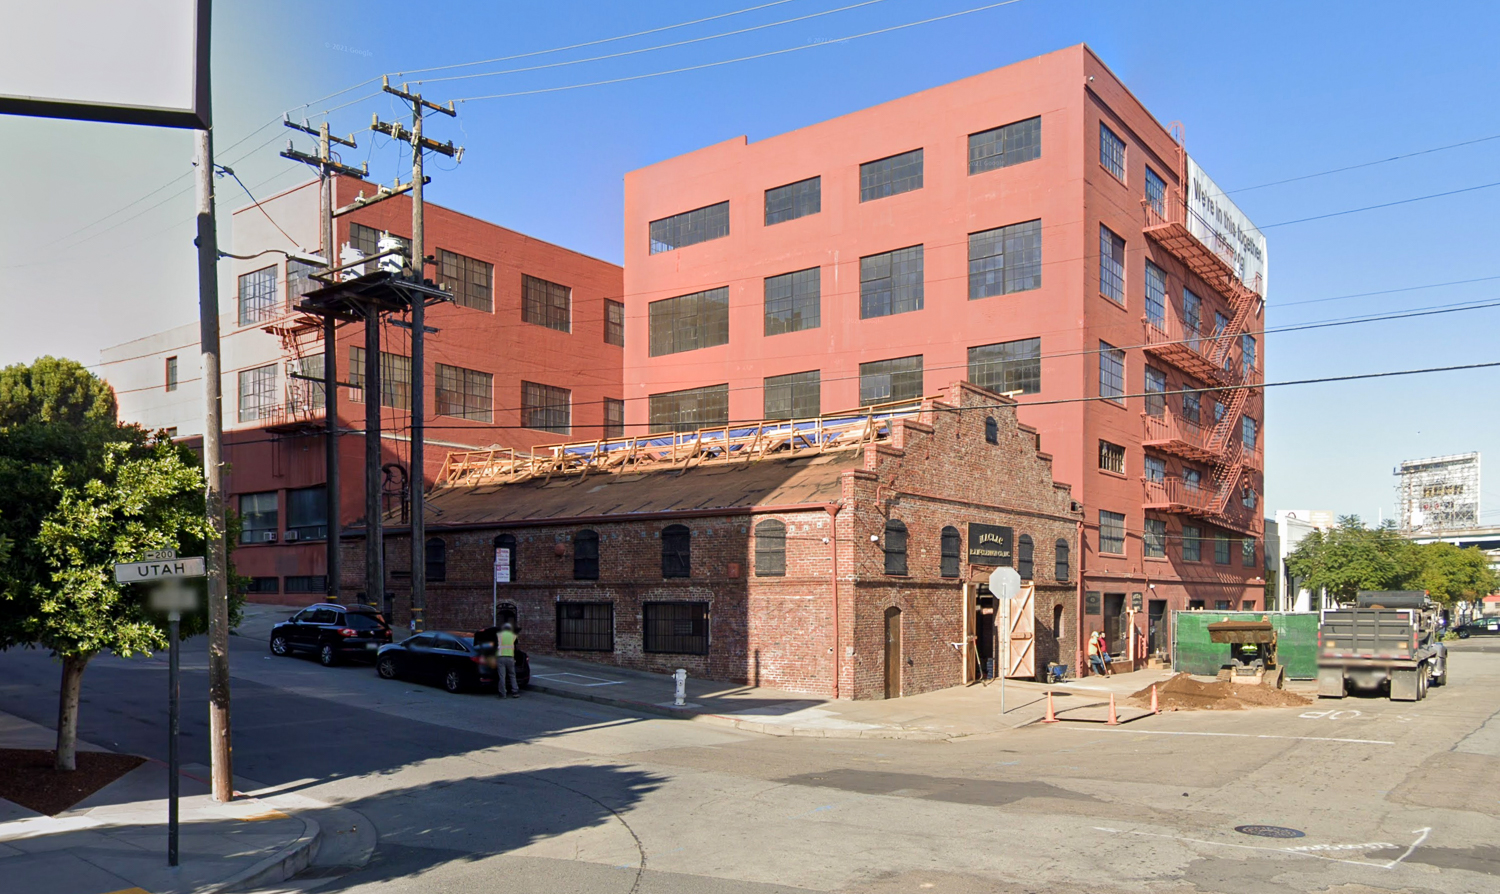 Maclac Building circa December 2020, image via Google Street View